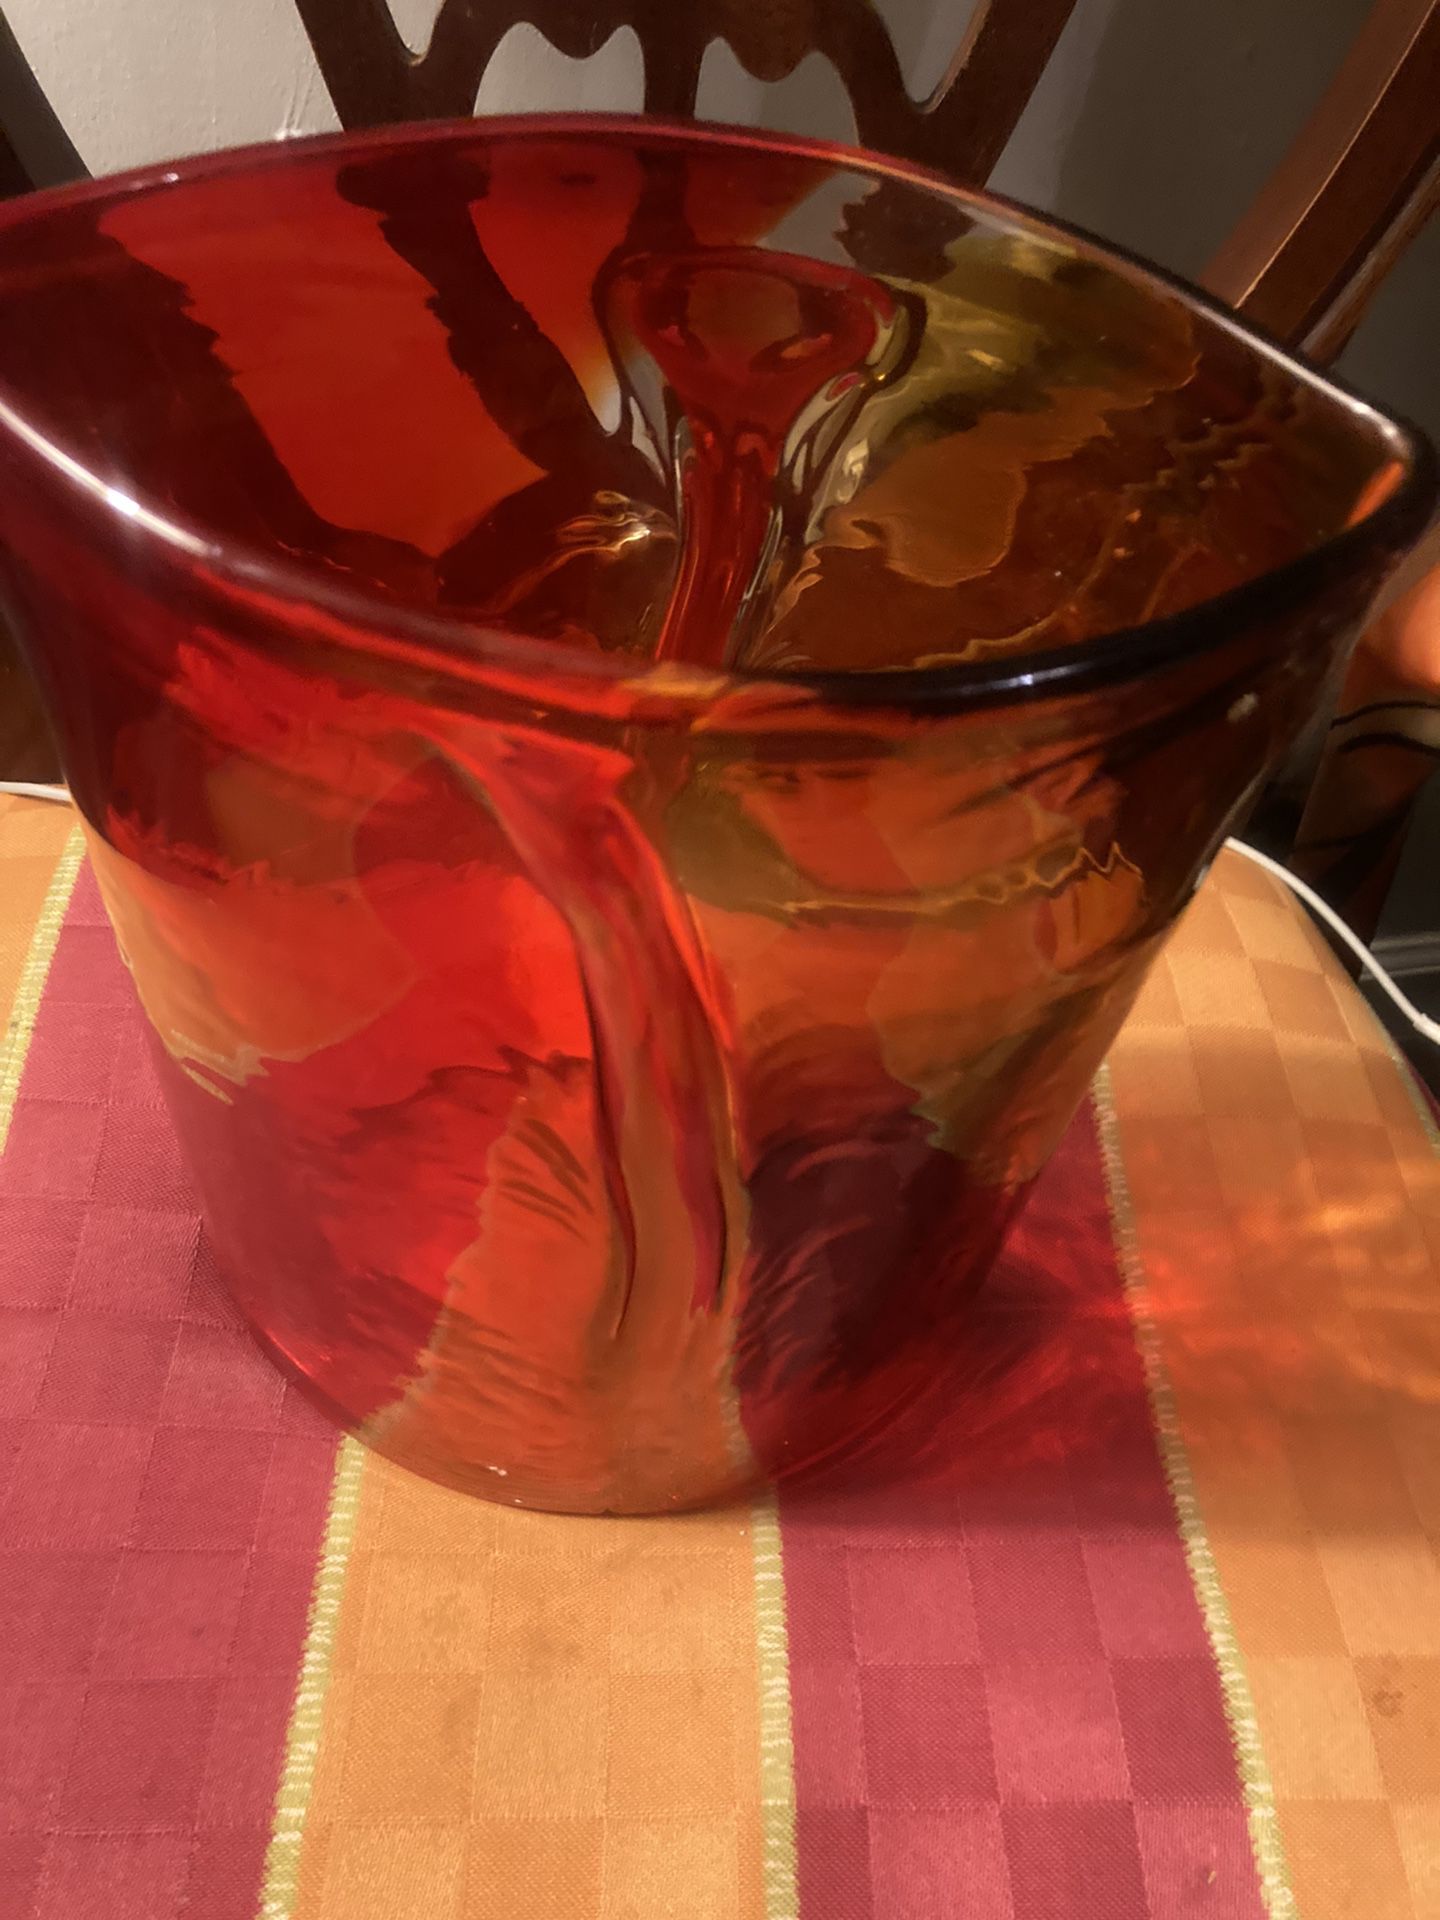 Blown Glass Vintage Vase